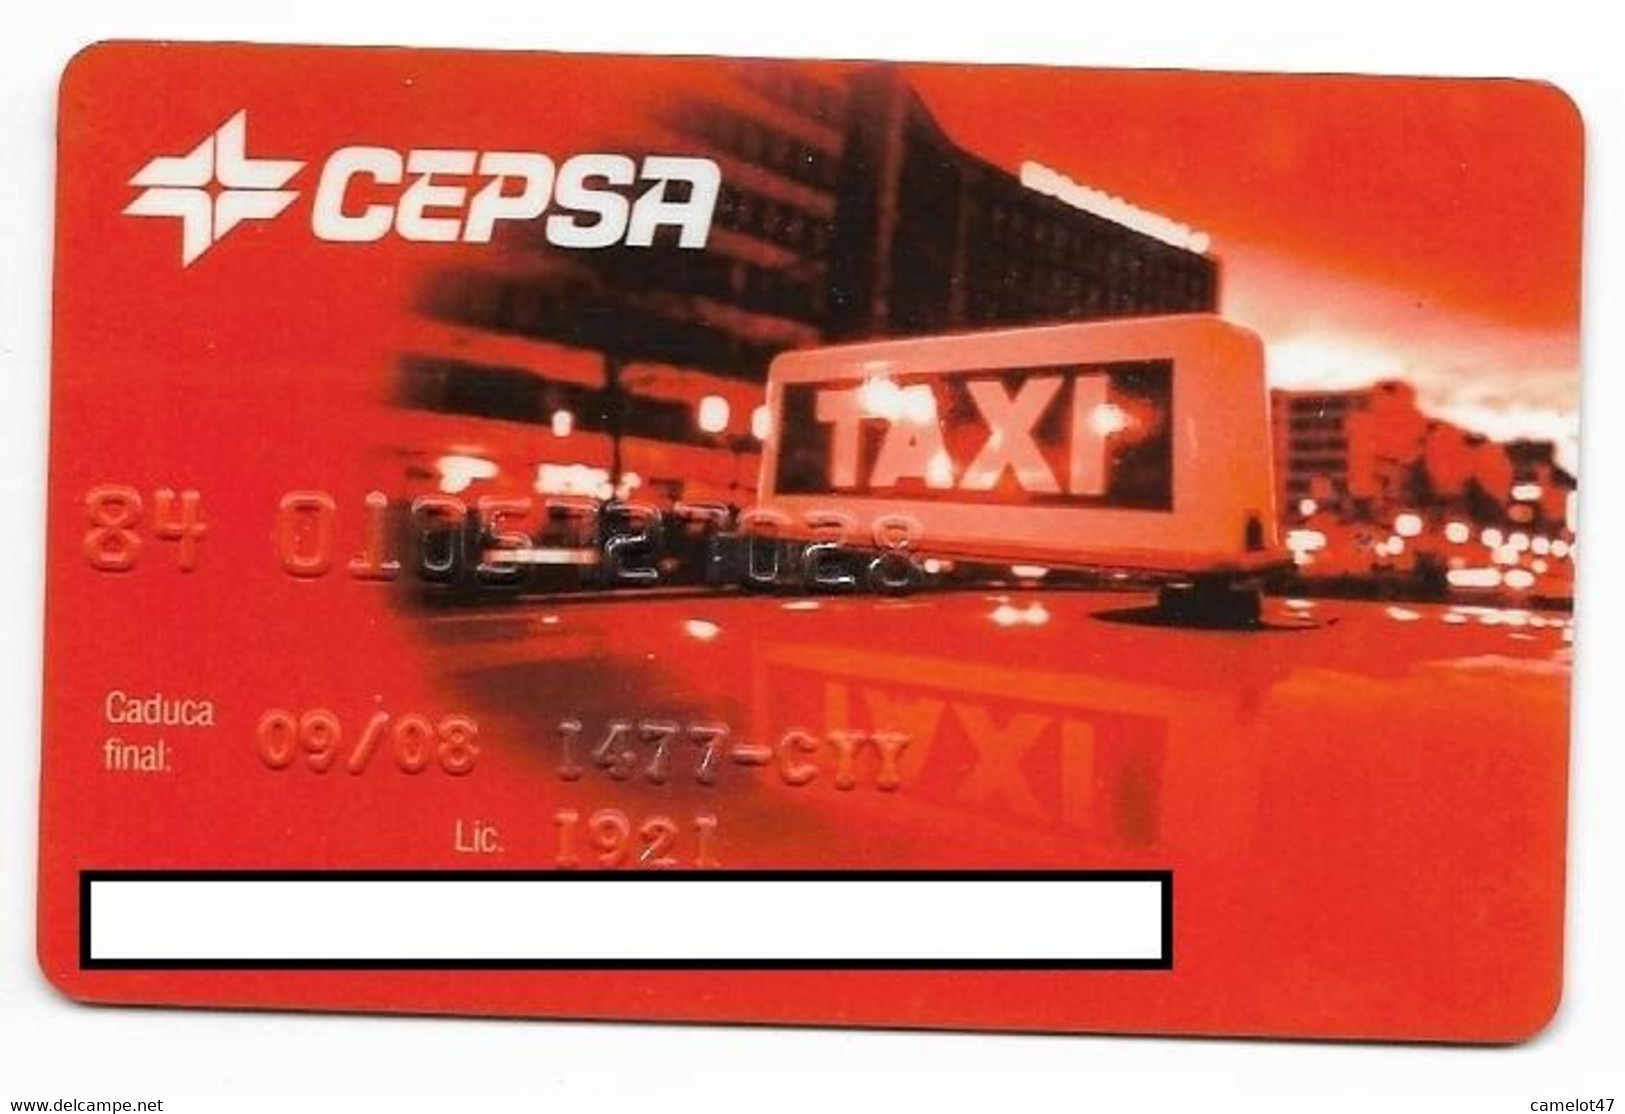 Cepsa Spain, Gas Stations Rewards Magnetic Card, # Cepsa-3  NOT A PHONE CARD - Erdöl